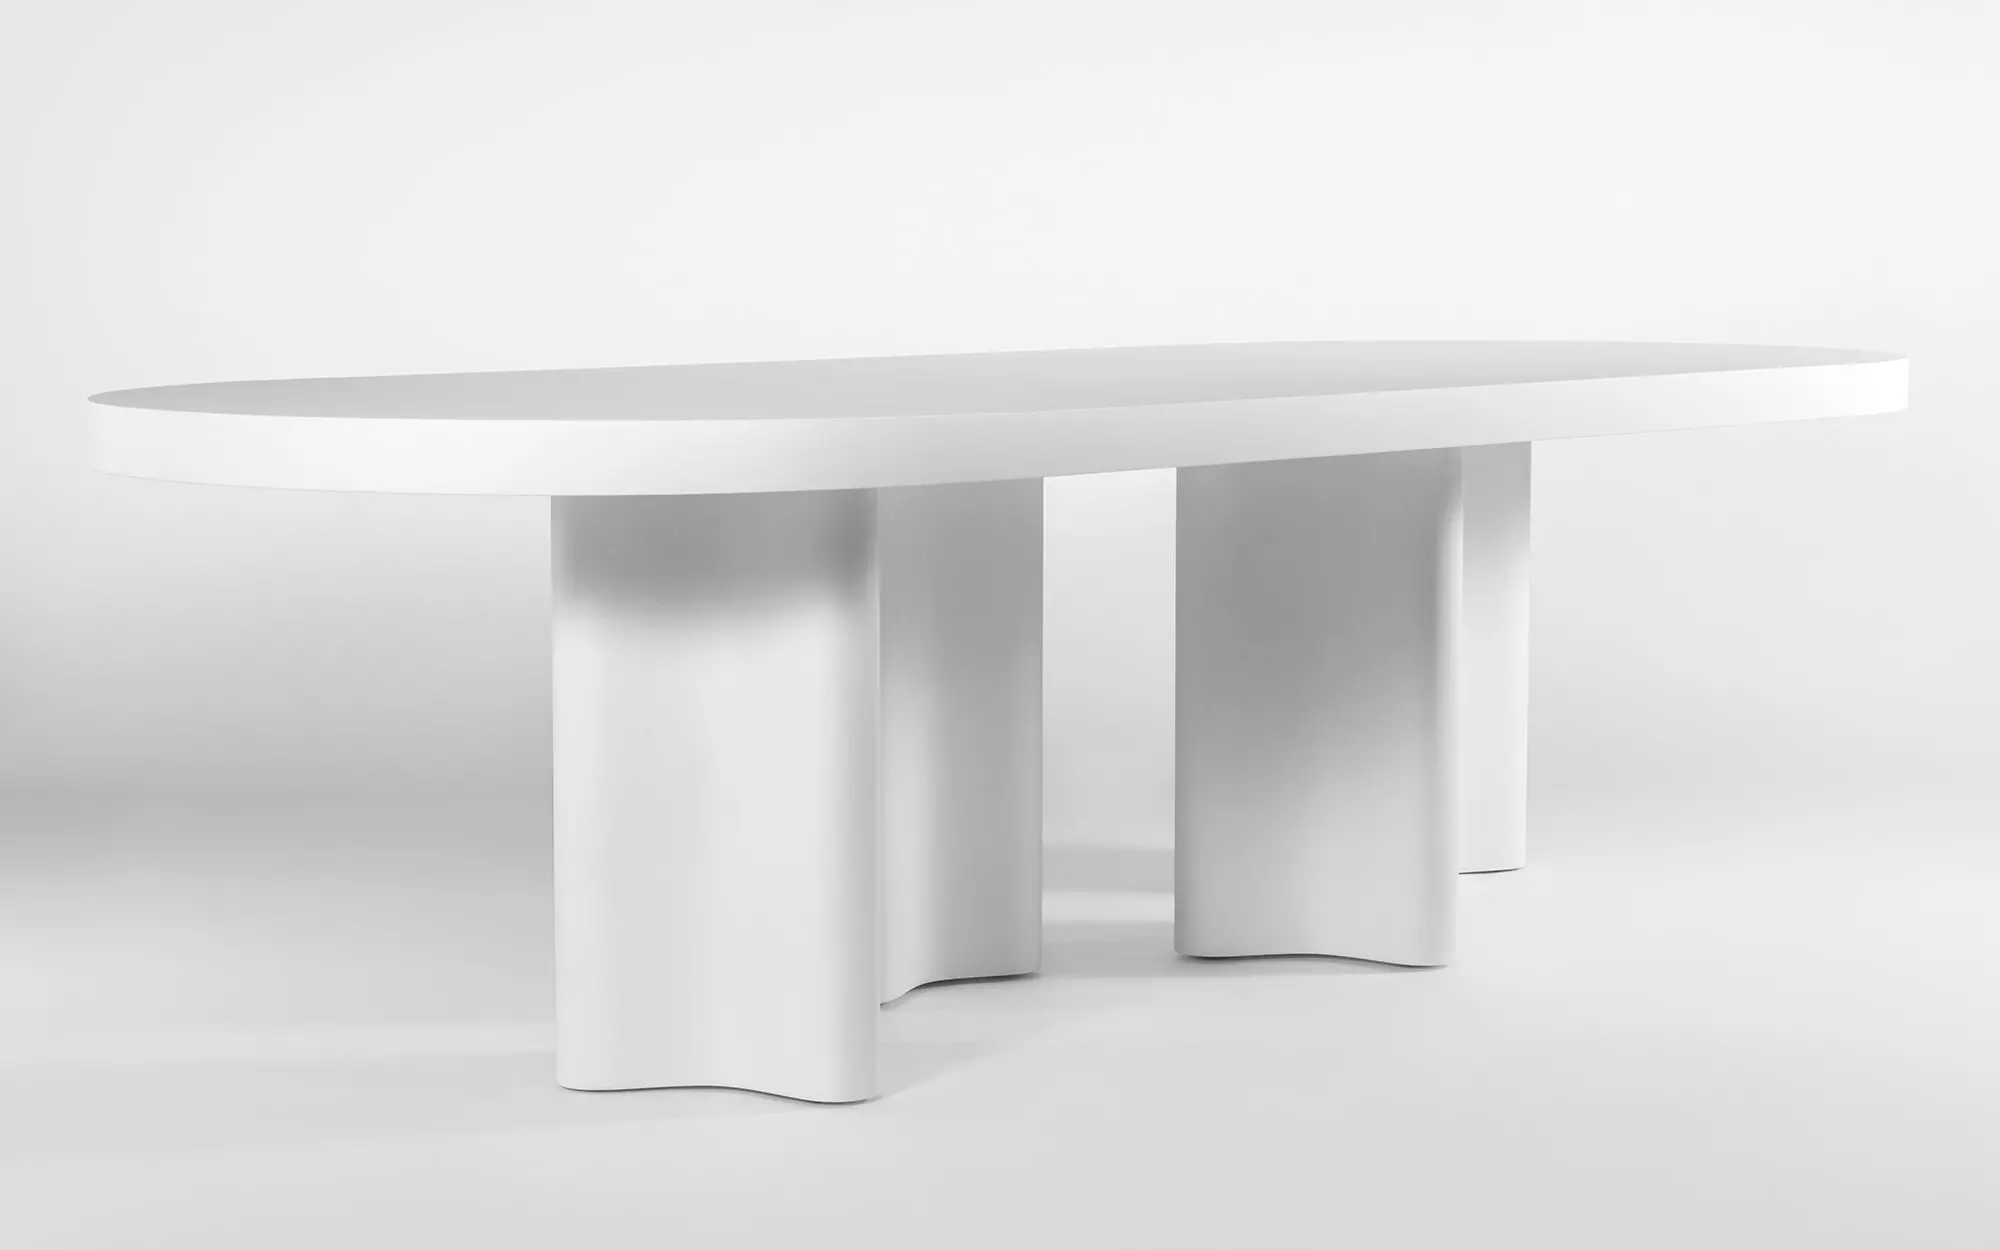 Azo oval table - François Bauchet - Coffee table - Galerie kreo